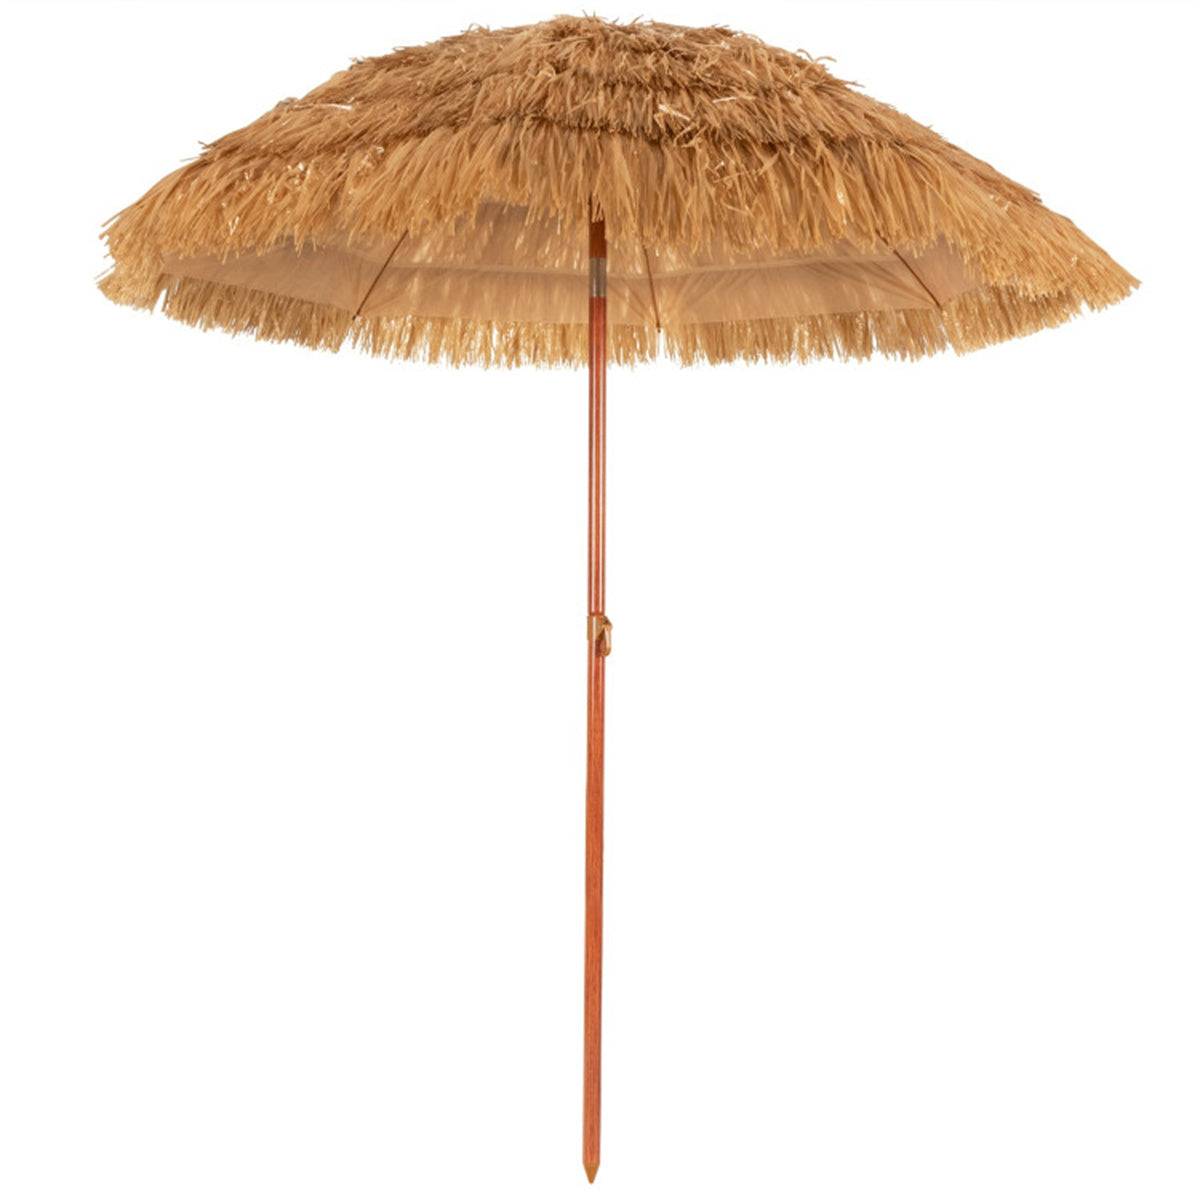 6.5-foot portable beach umbrella with adjustable tilt Success